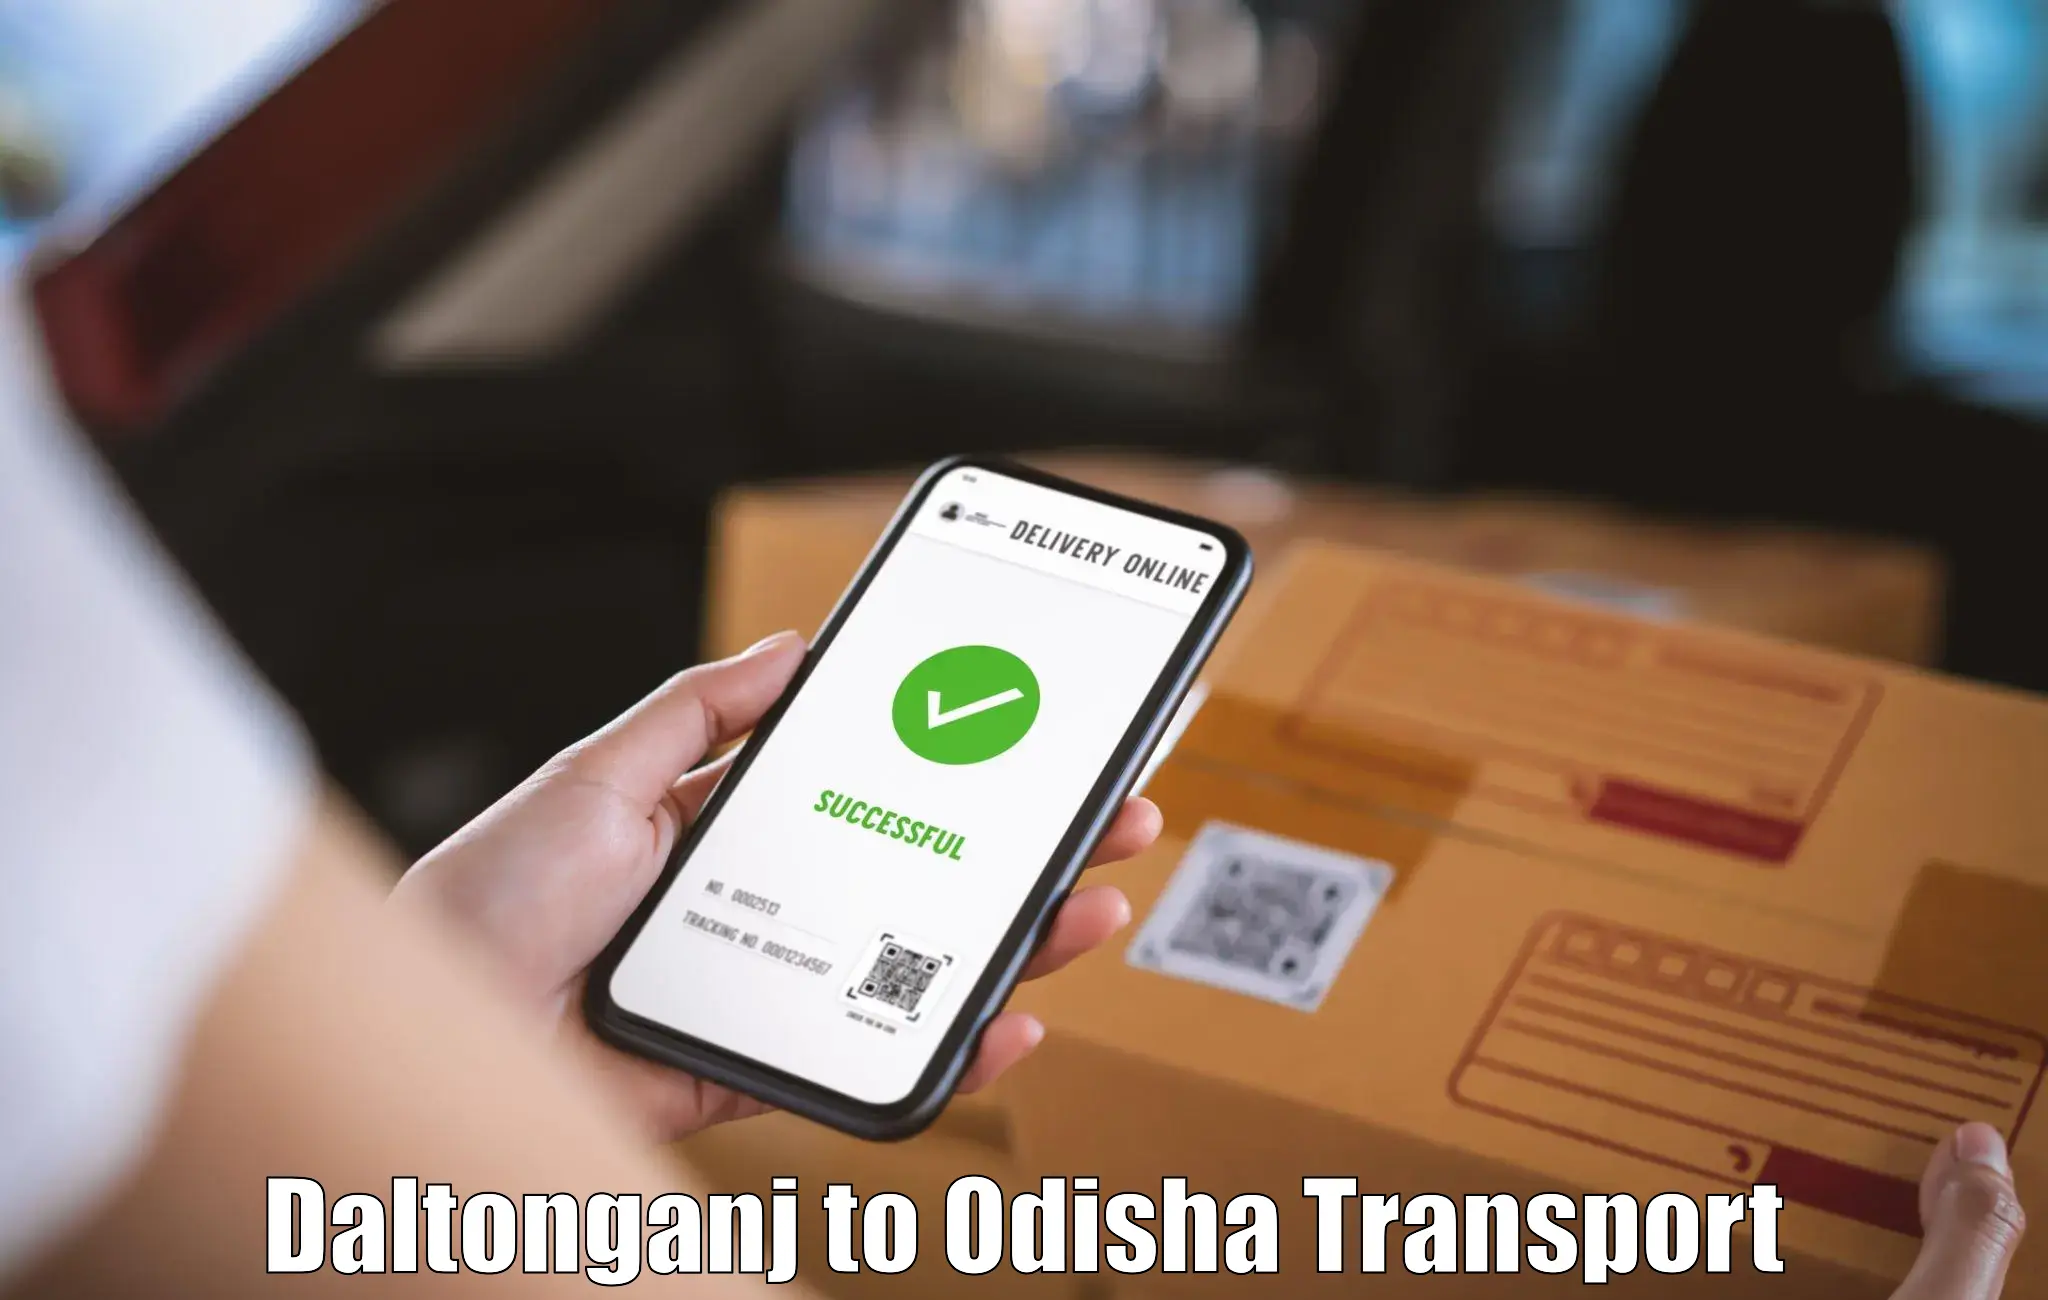 Daily transport service Daltonganj to Anandapur